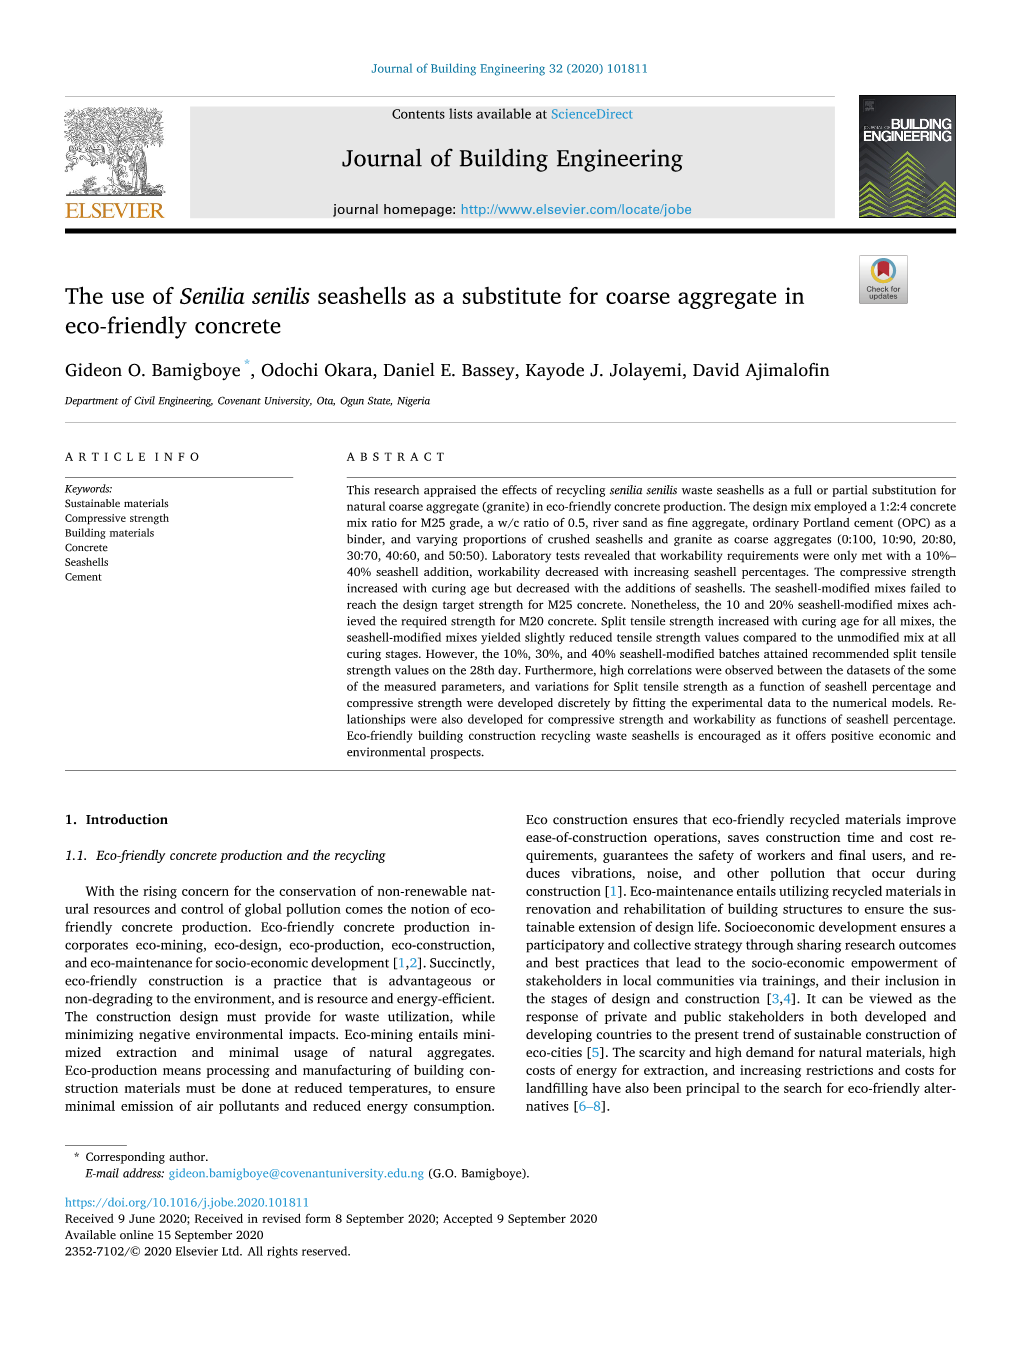 The Use of Senilia Senilis Seashells As a Substitute for Coarse Aggregate in Eco-Friendly Concrete